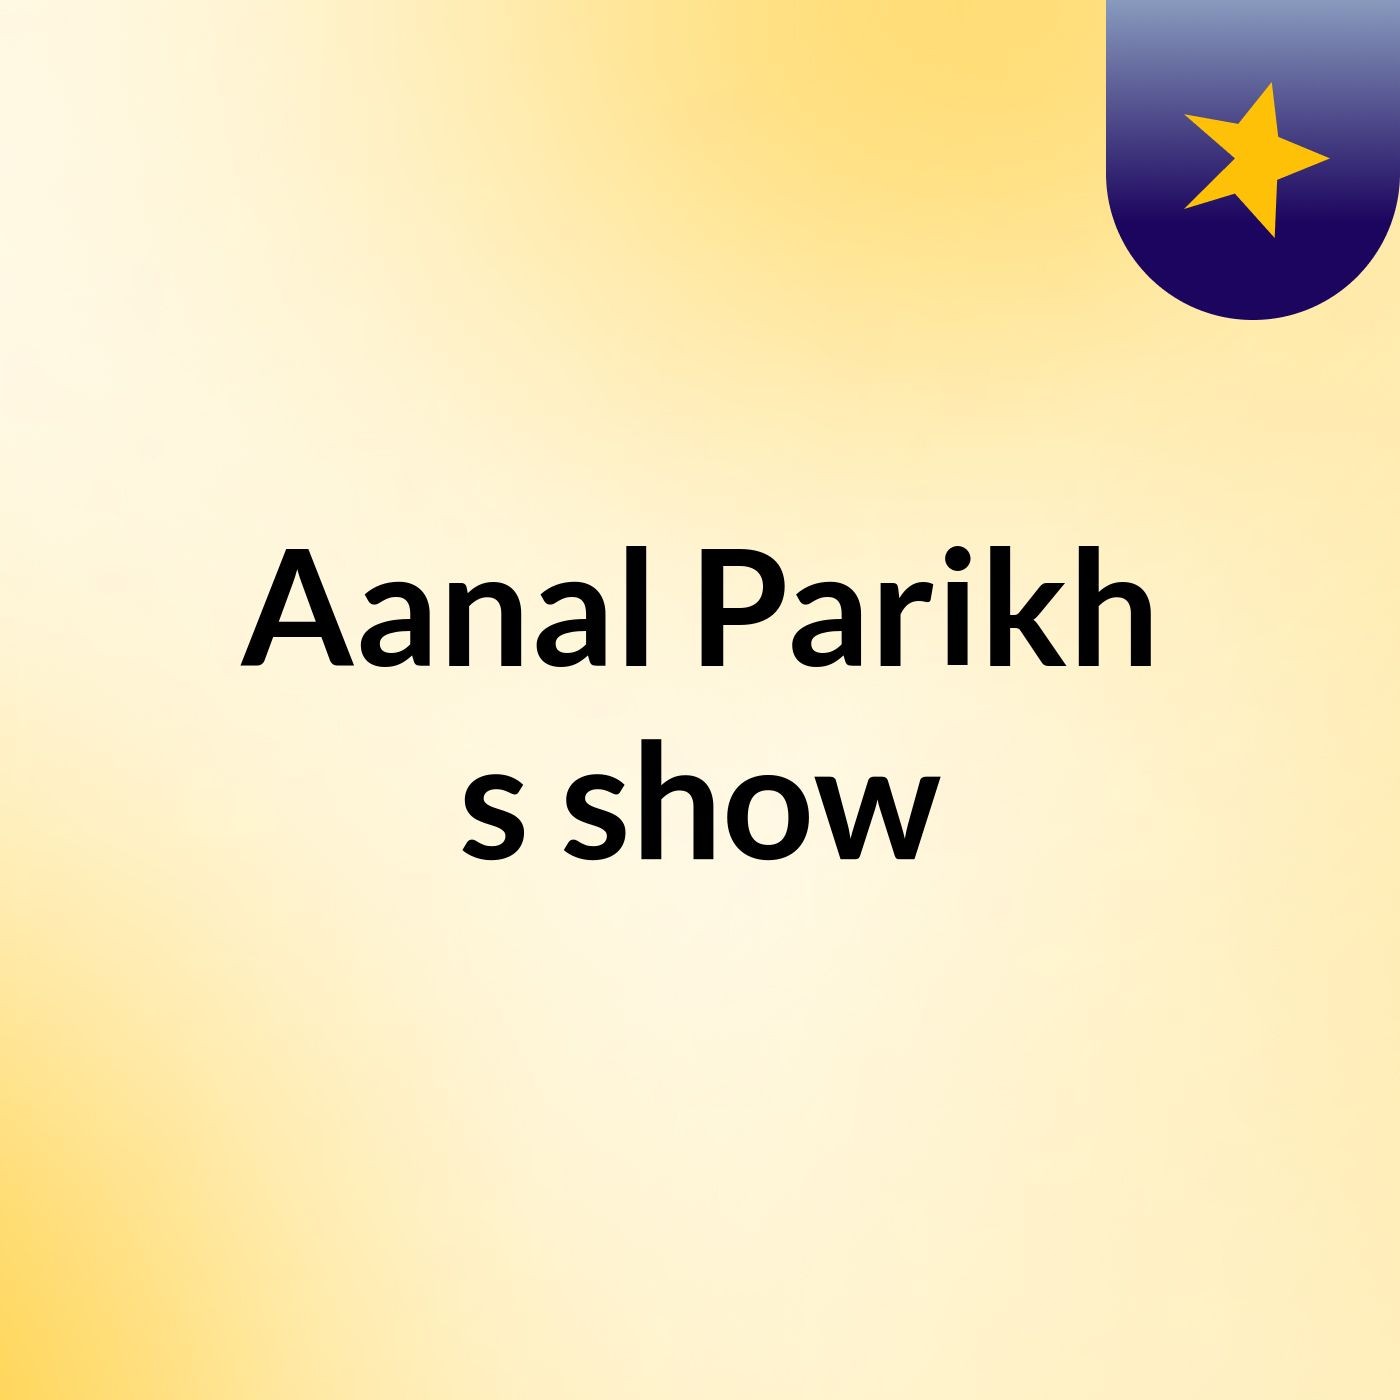 Aanal Parikh's show